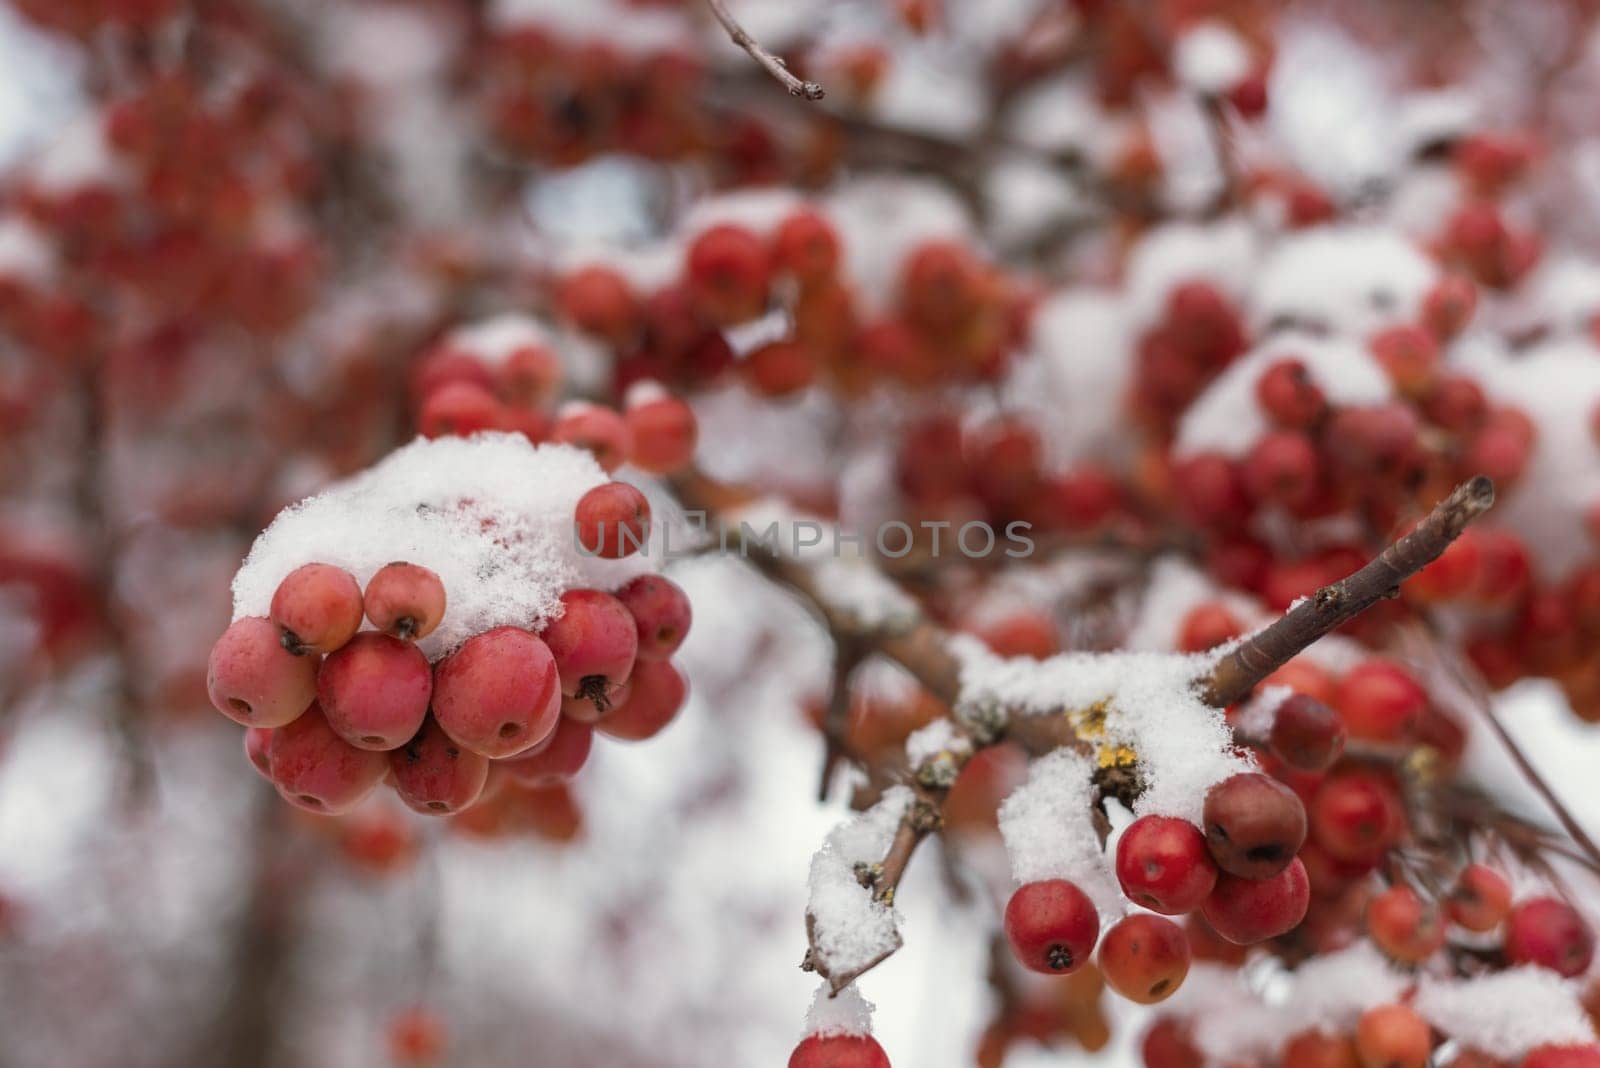 Winter's Crimson Beauty: Snow-Covered Rowan in Rural Landscape. Enchanting Winter Scenes: Capturing the Festive Red Rowan in a Snow-Covered Countryside by Andrii_Ko